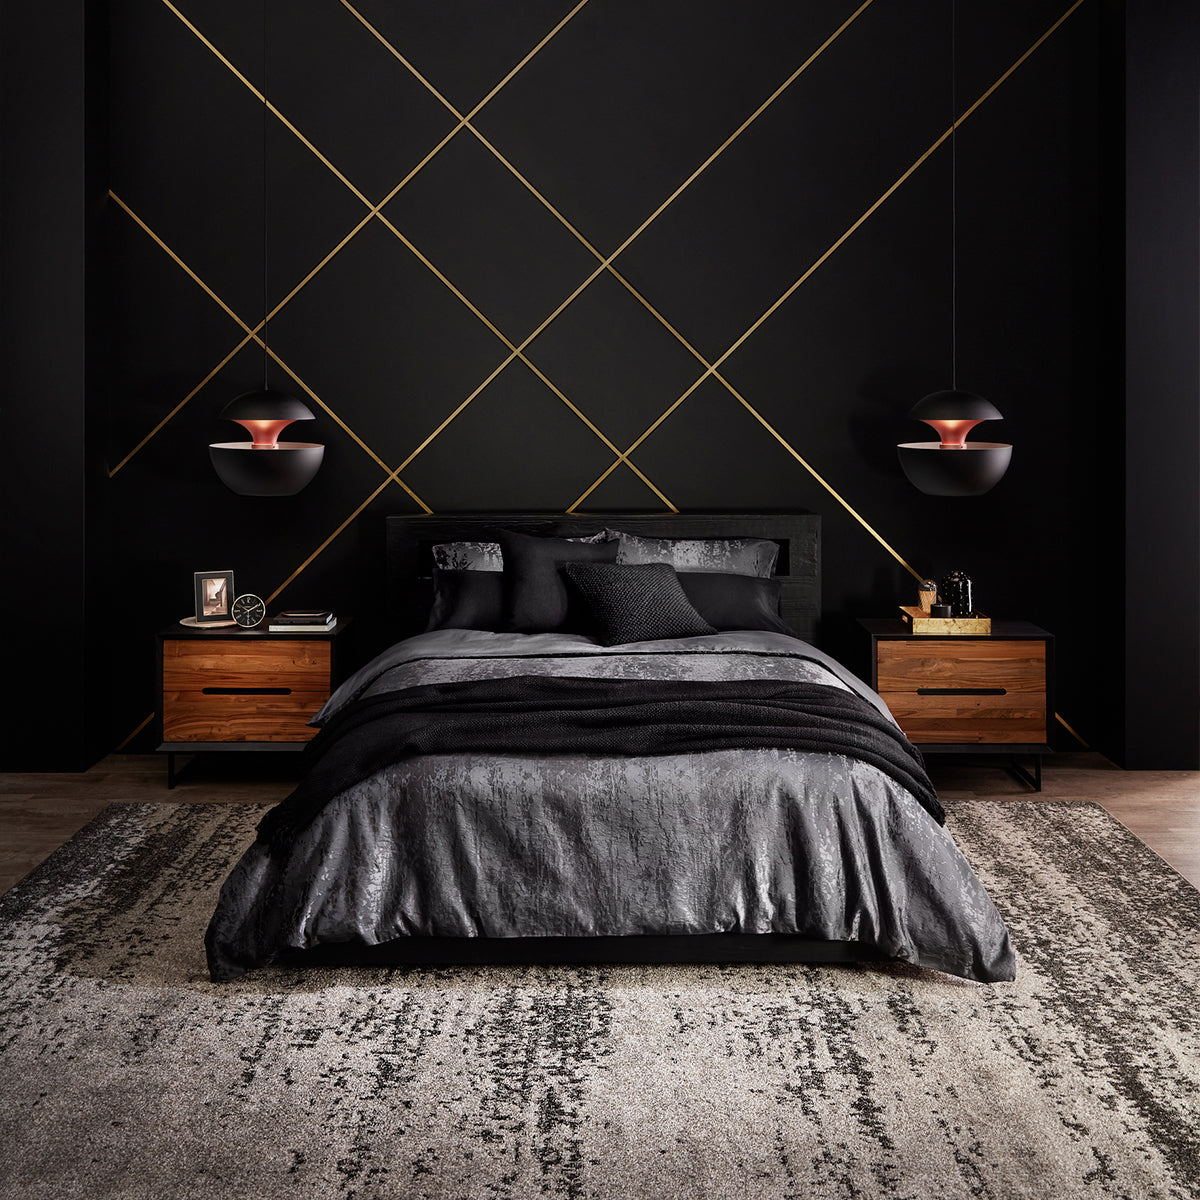 Beautyrest Black K-Class Firm Pillow Top Mattress With Comforter And Pillows In Bedroom